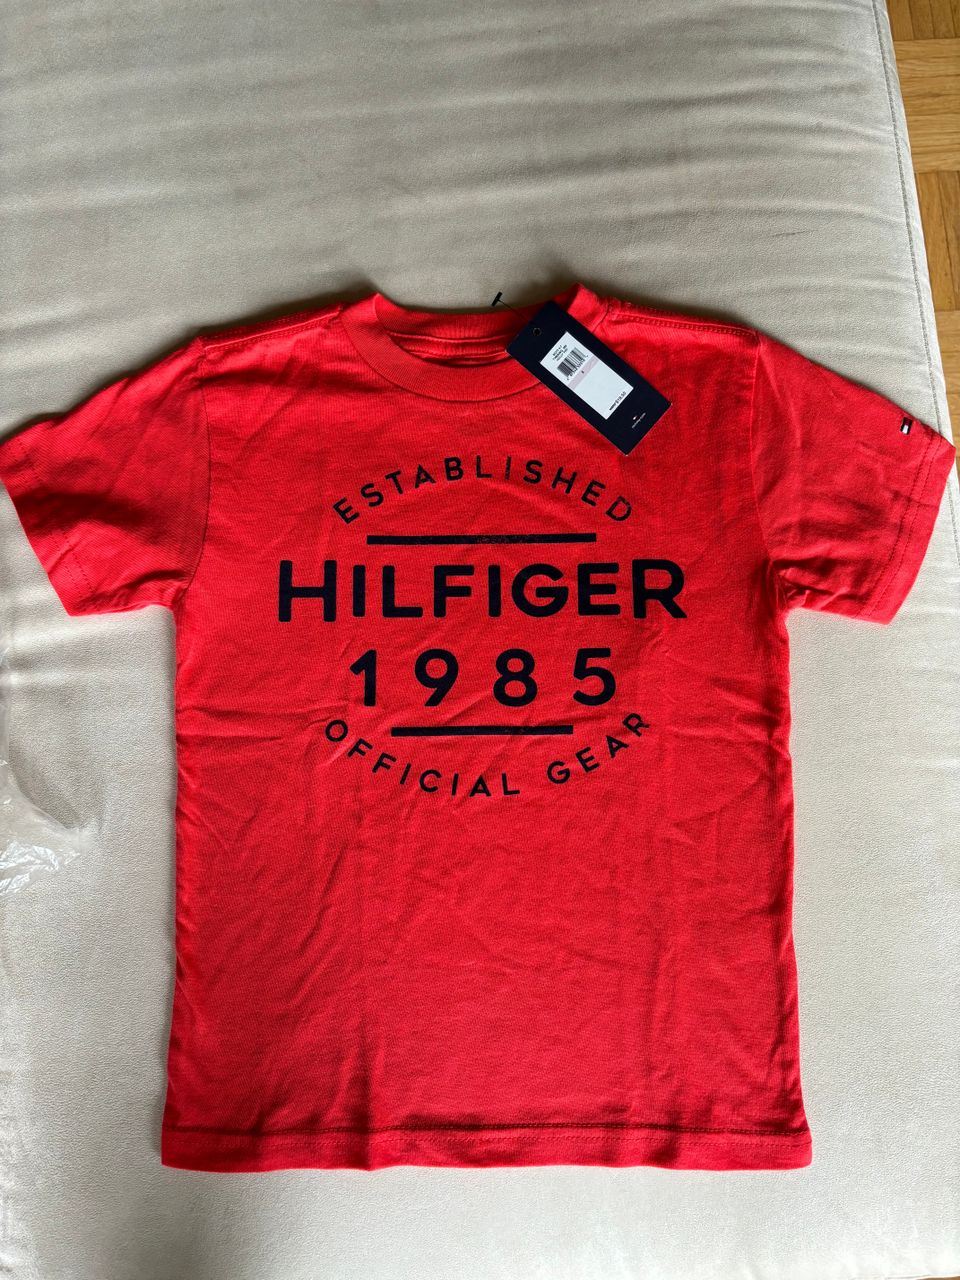 Tommy Hilfiger t-paita